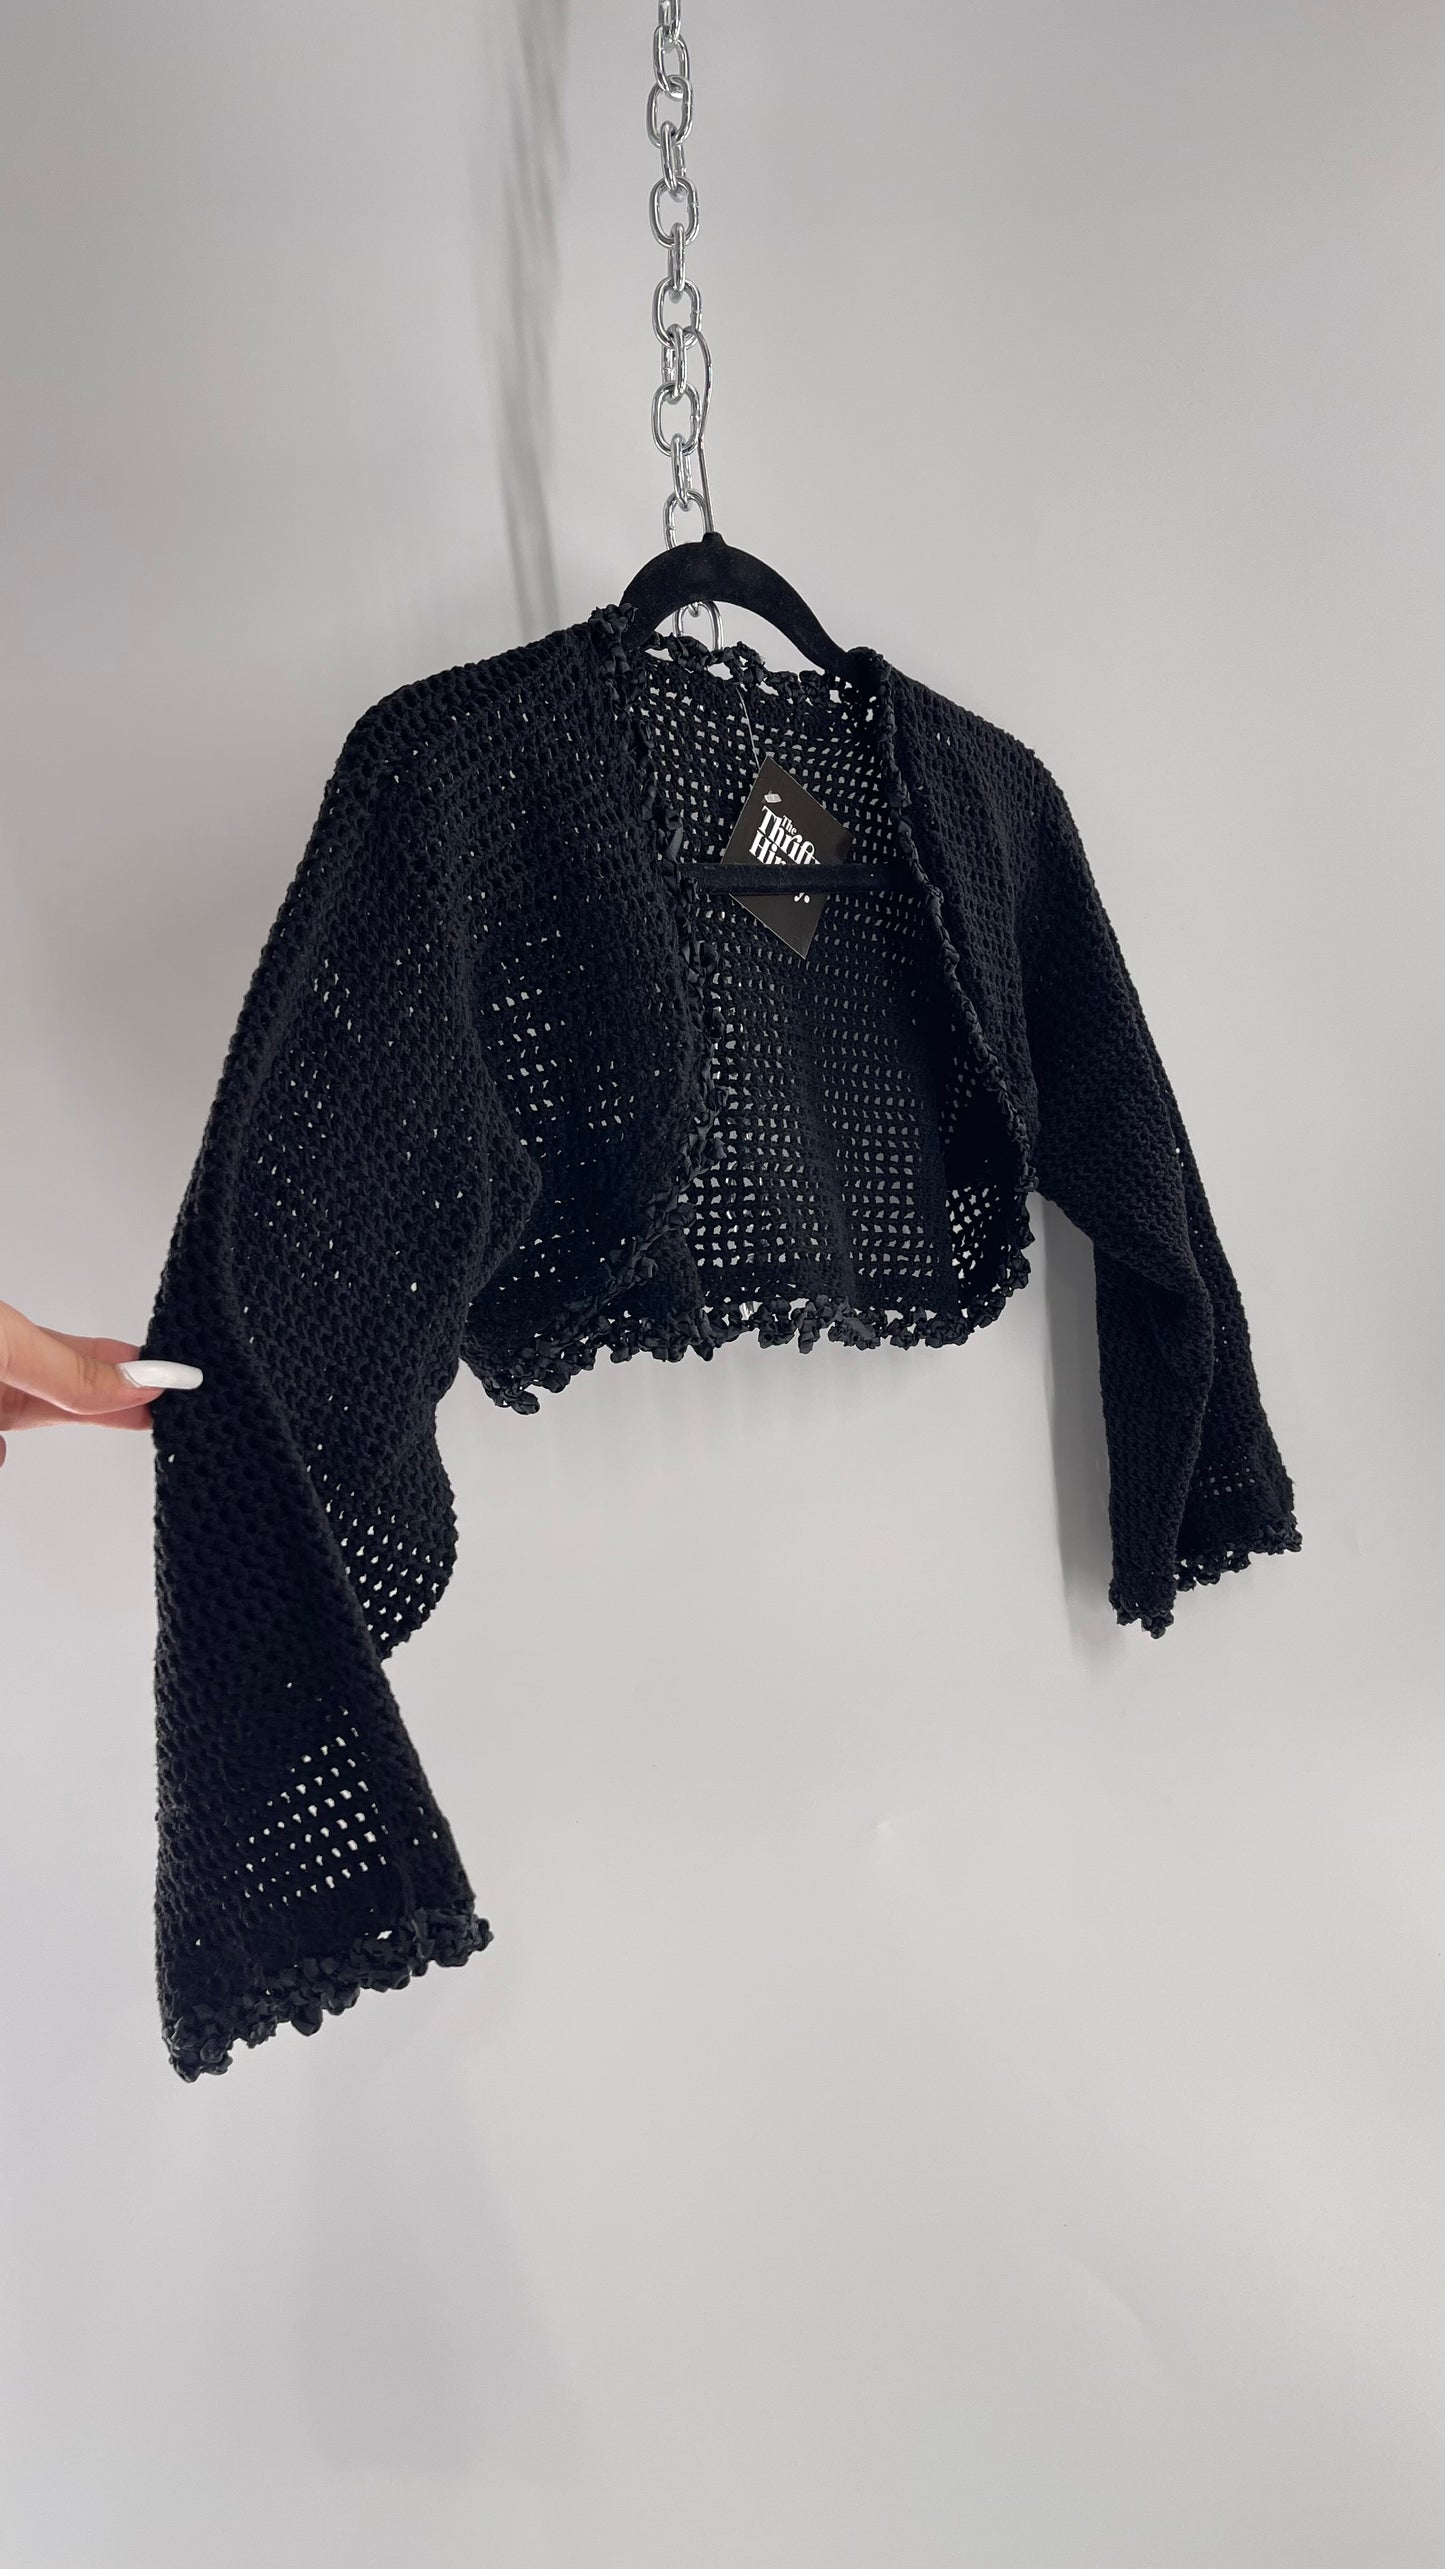 Vintage Black Hand Knit Crochet Shrug with Ribbon Detailing (Medium)